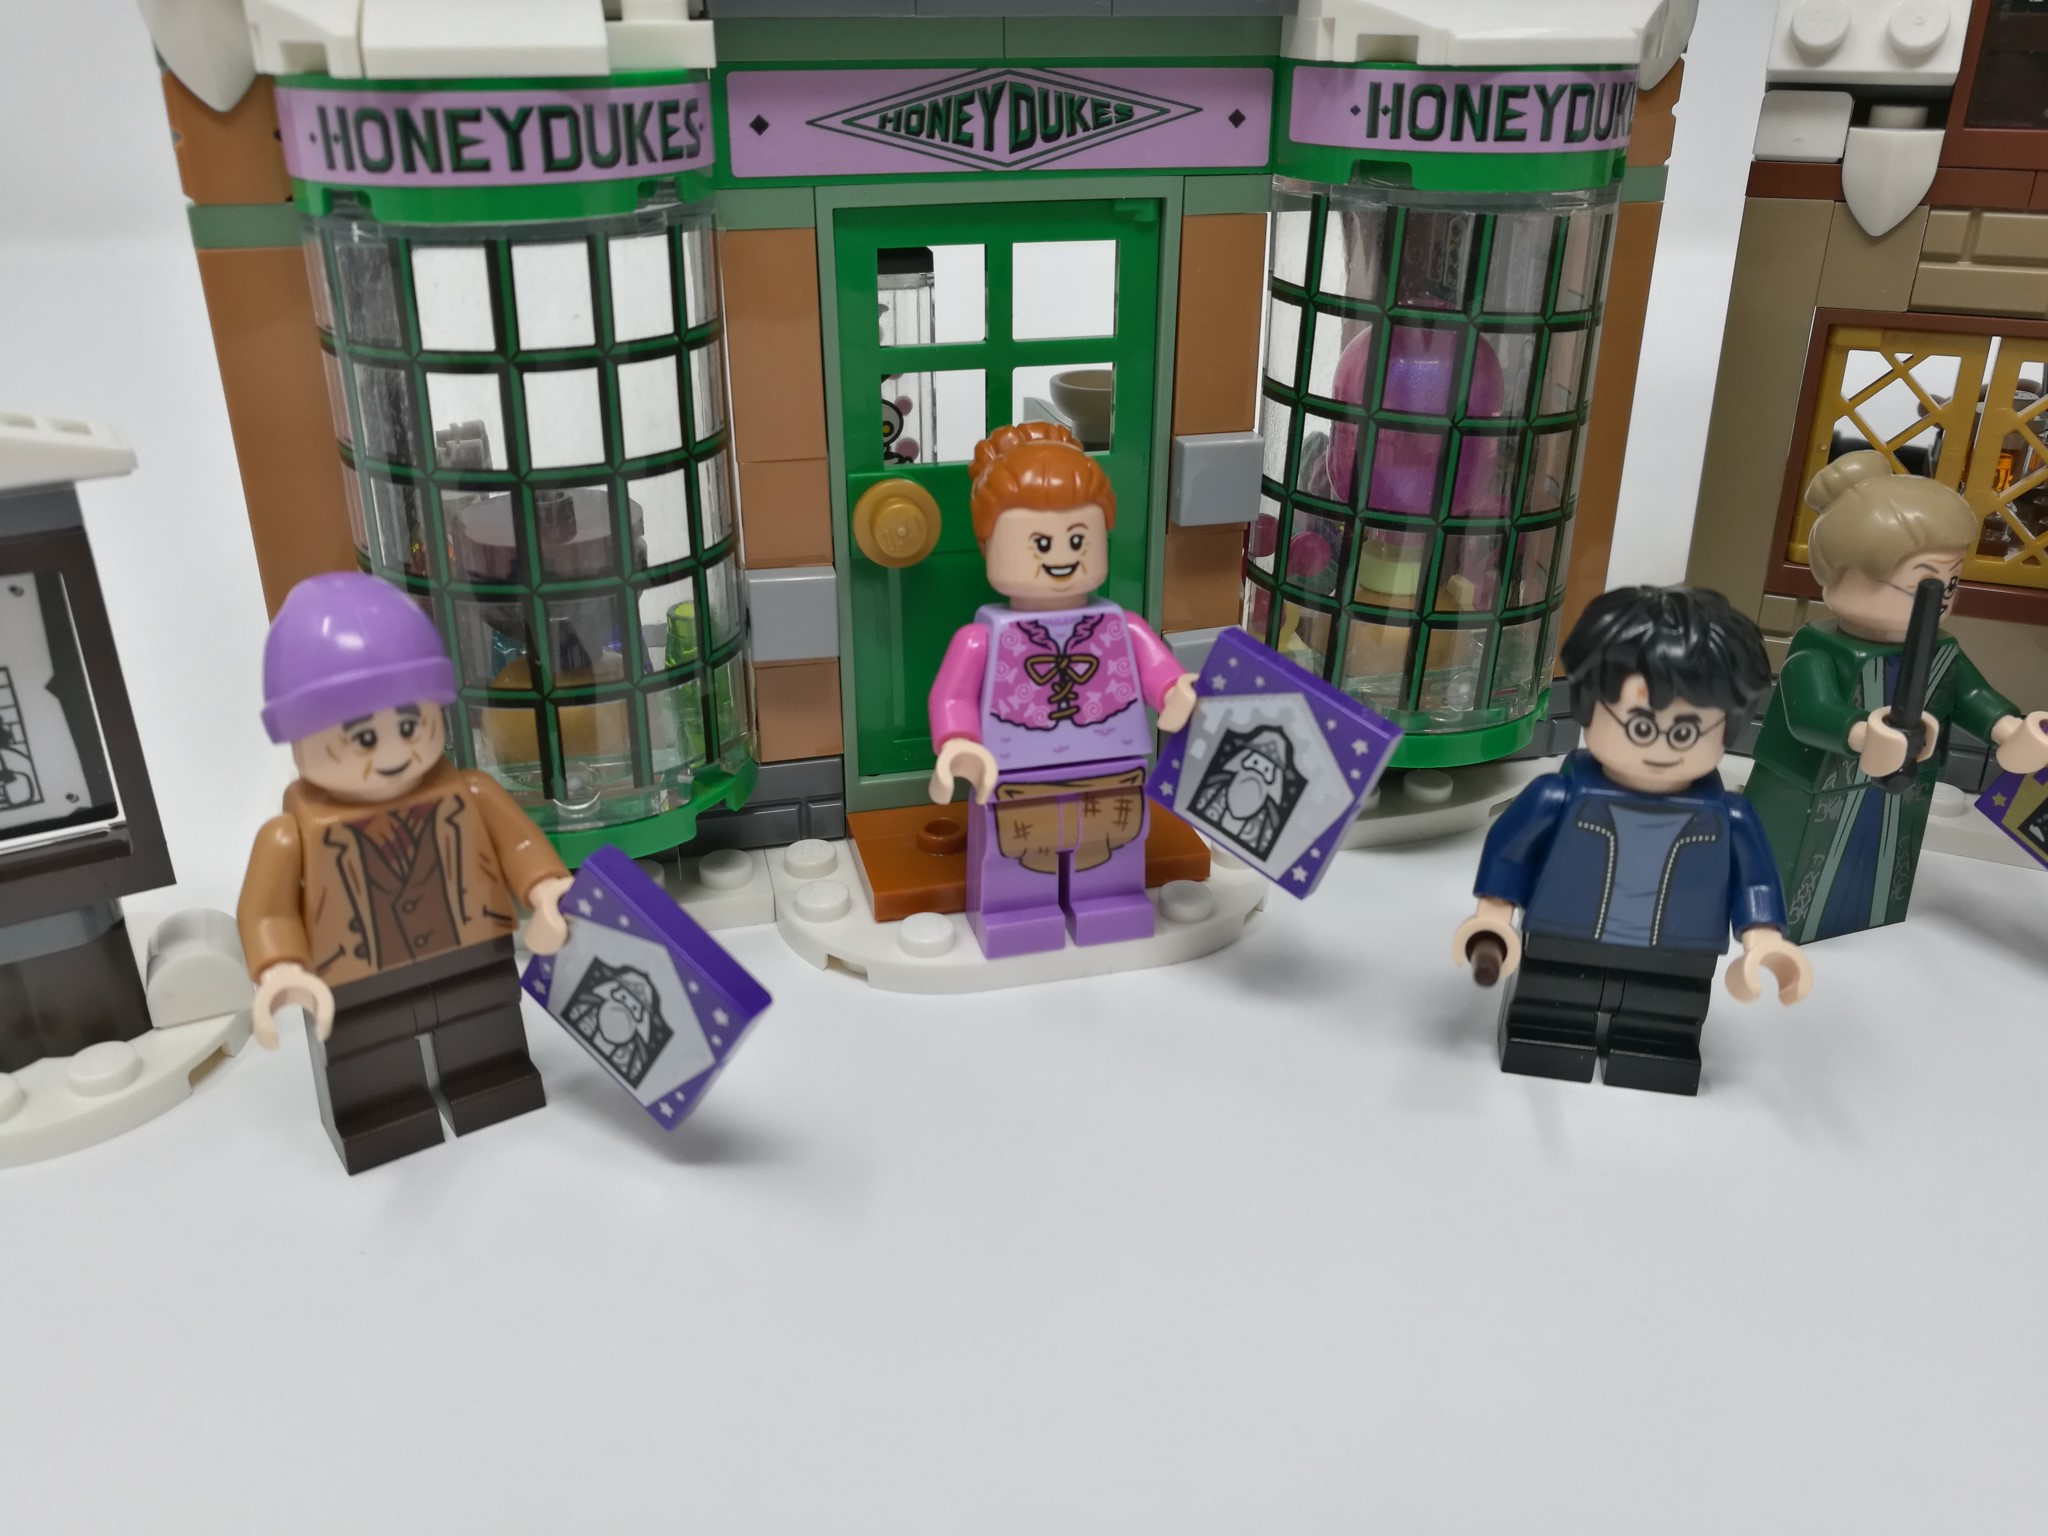 Lego Harry Potter Visita al Villaggio di Hogsmeade LEGO - 76388